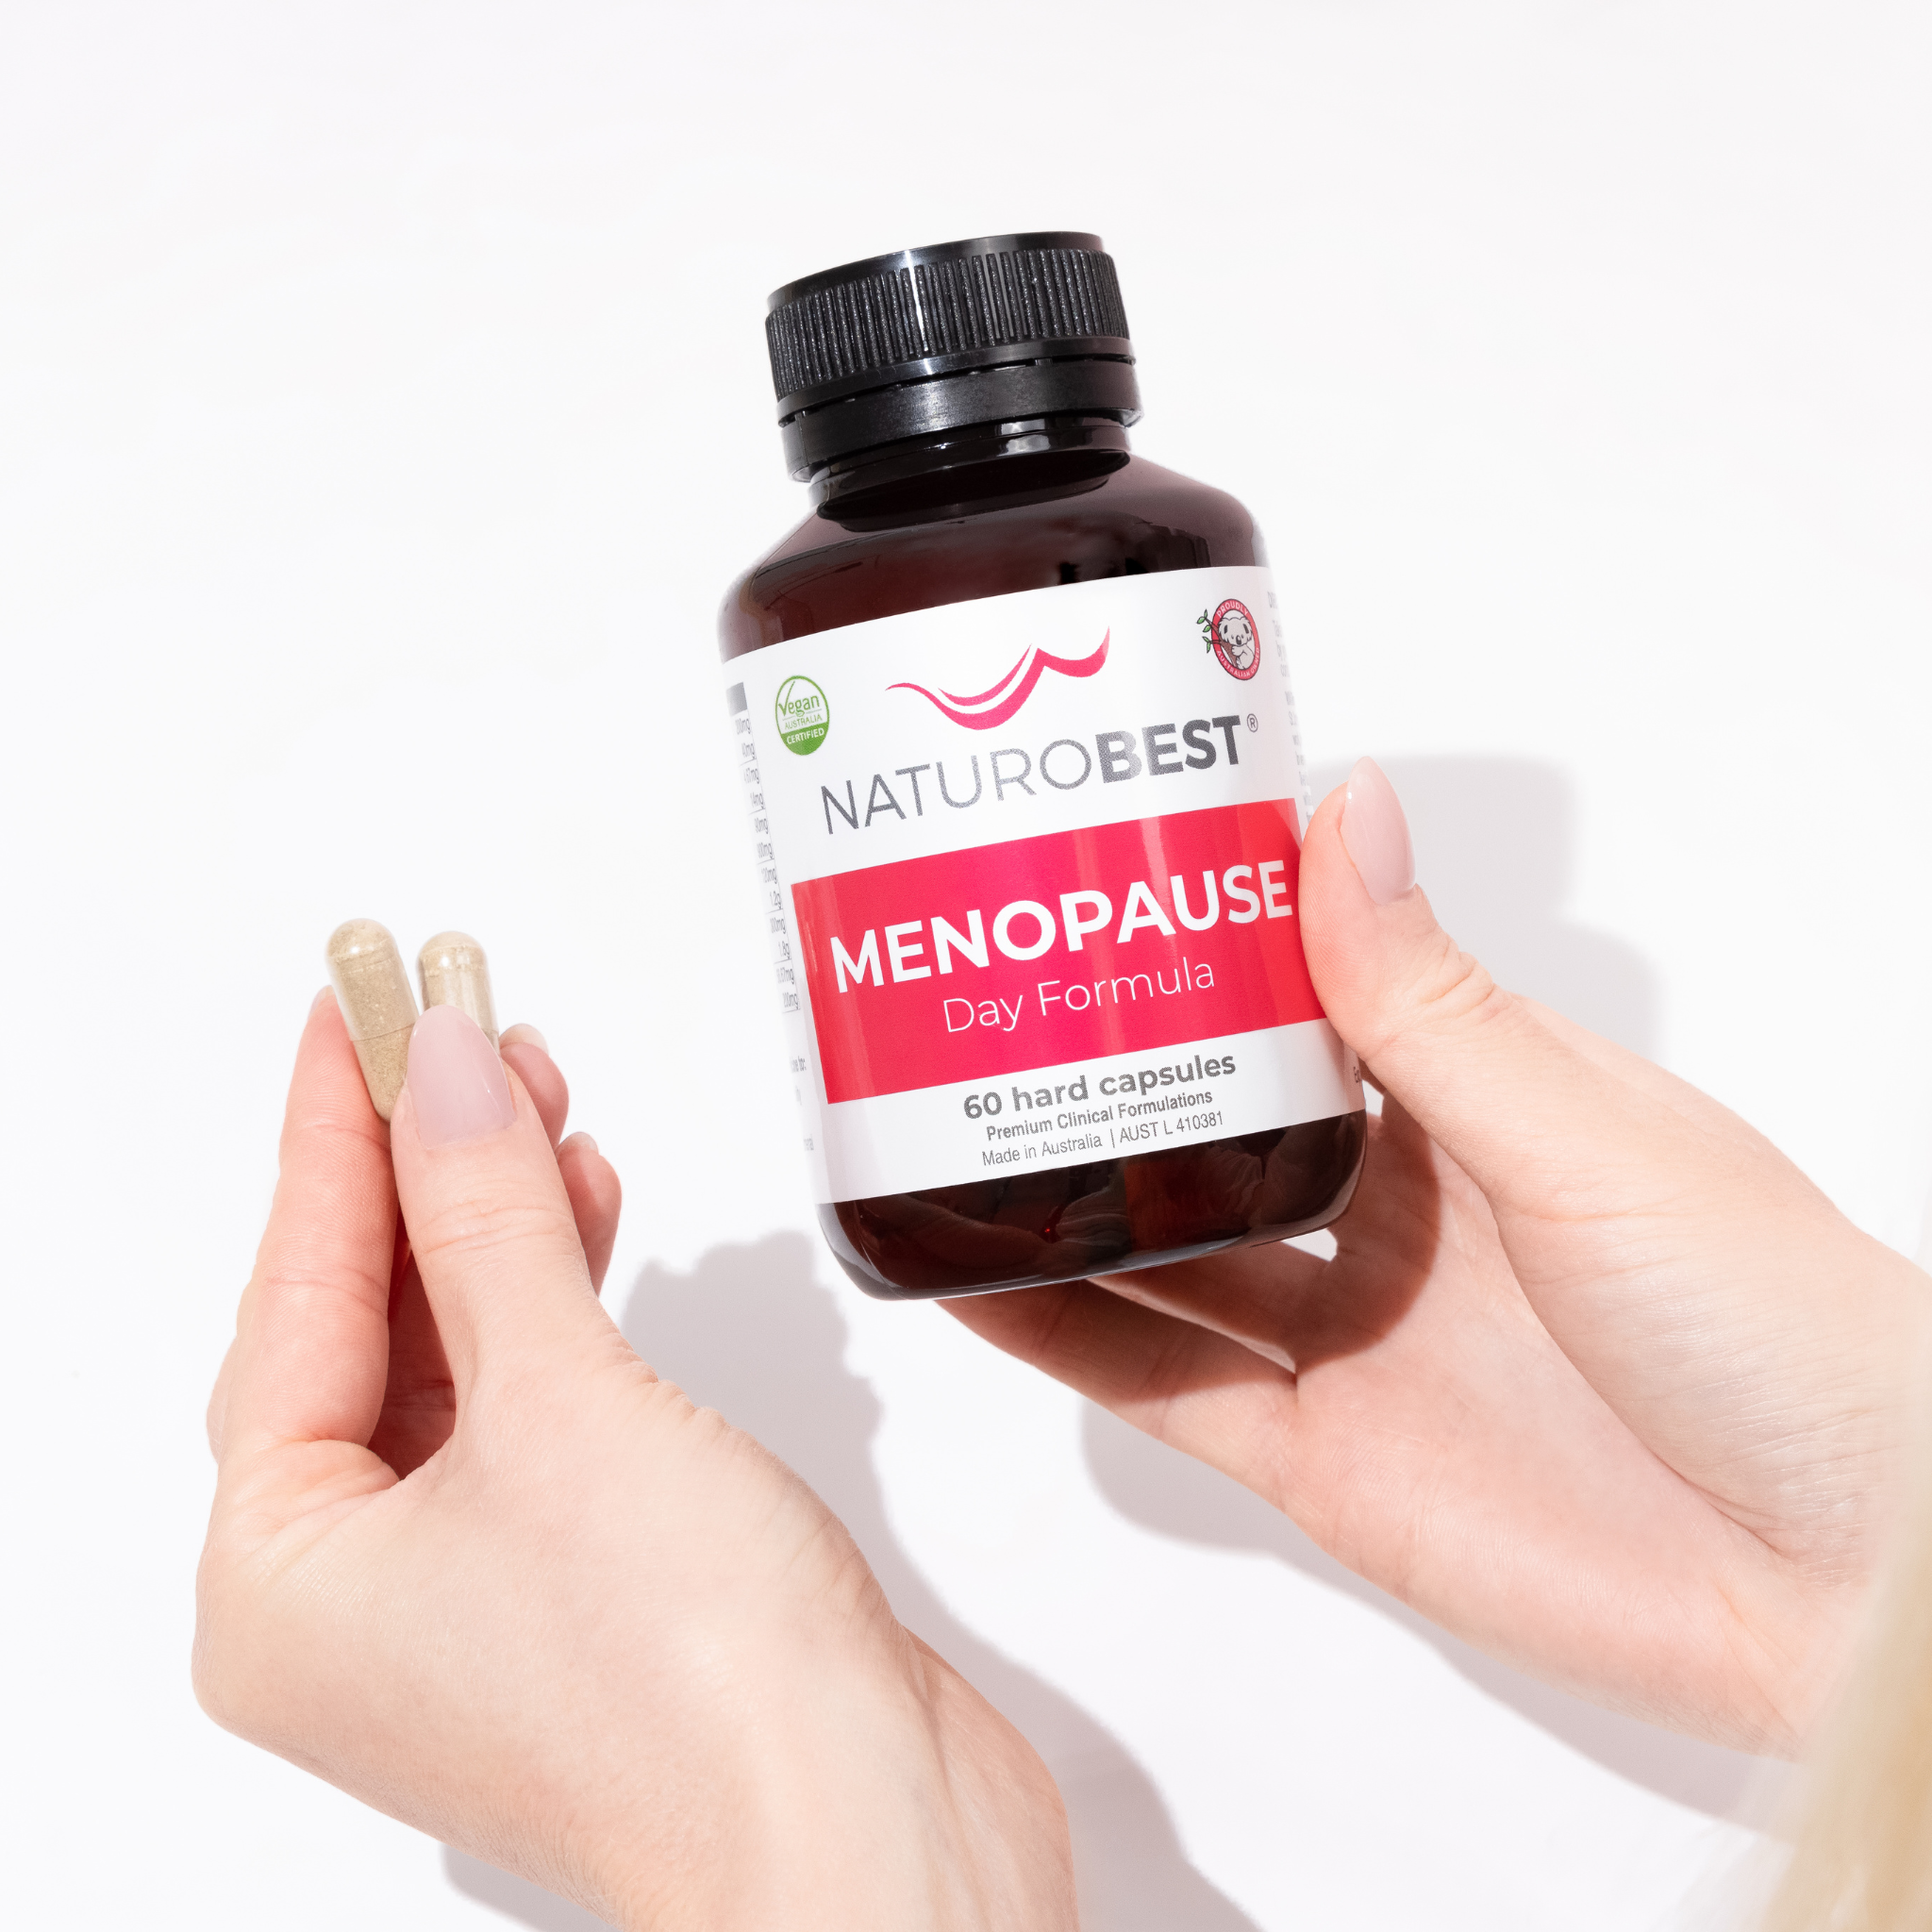 Menopause Day Formula